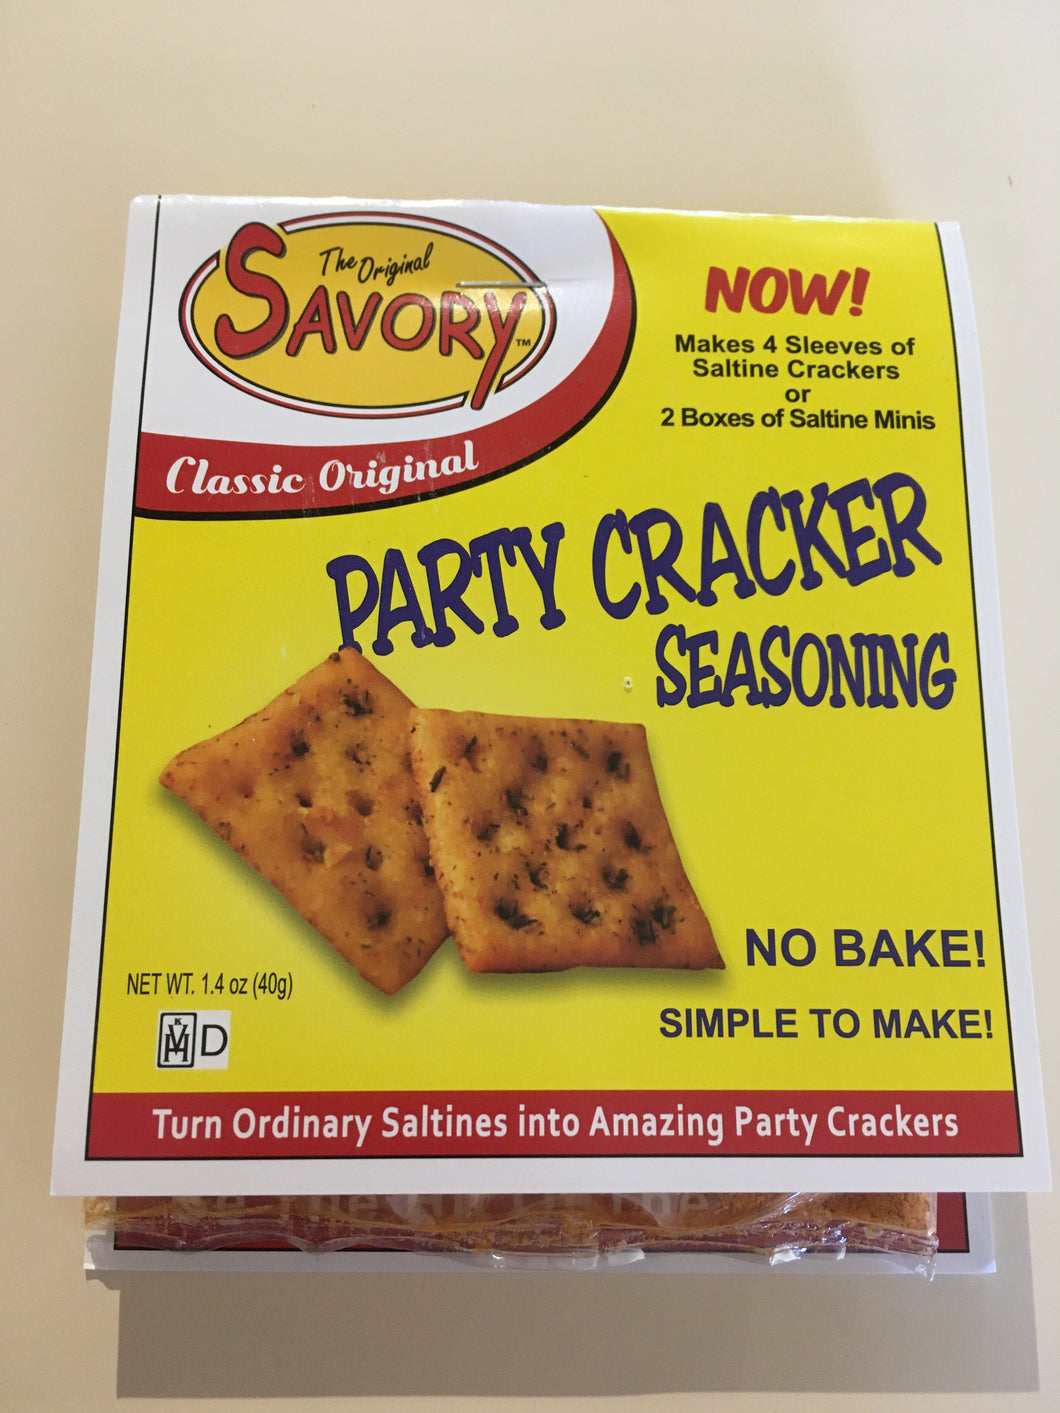 Classic Original Party Cracker Seasoning